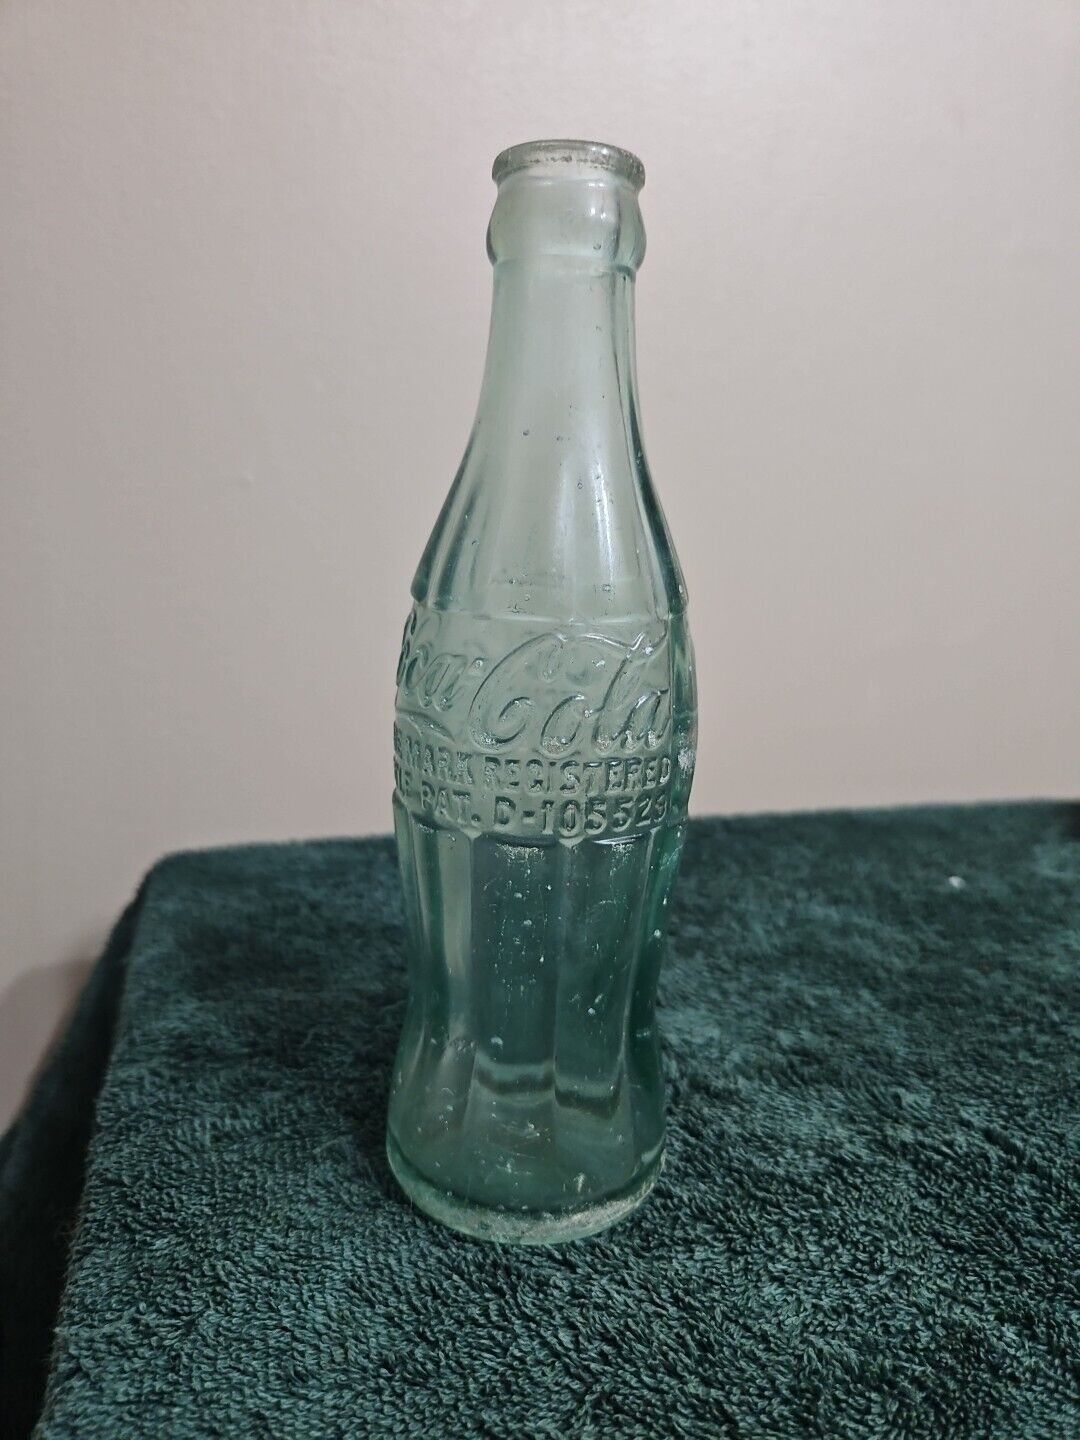 Coca Cola Green 6 oz Bottle Pat D-105529 Independence, Kansas 1938-51 LG Print